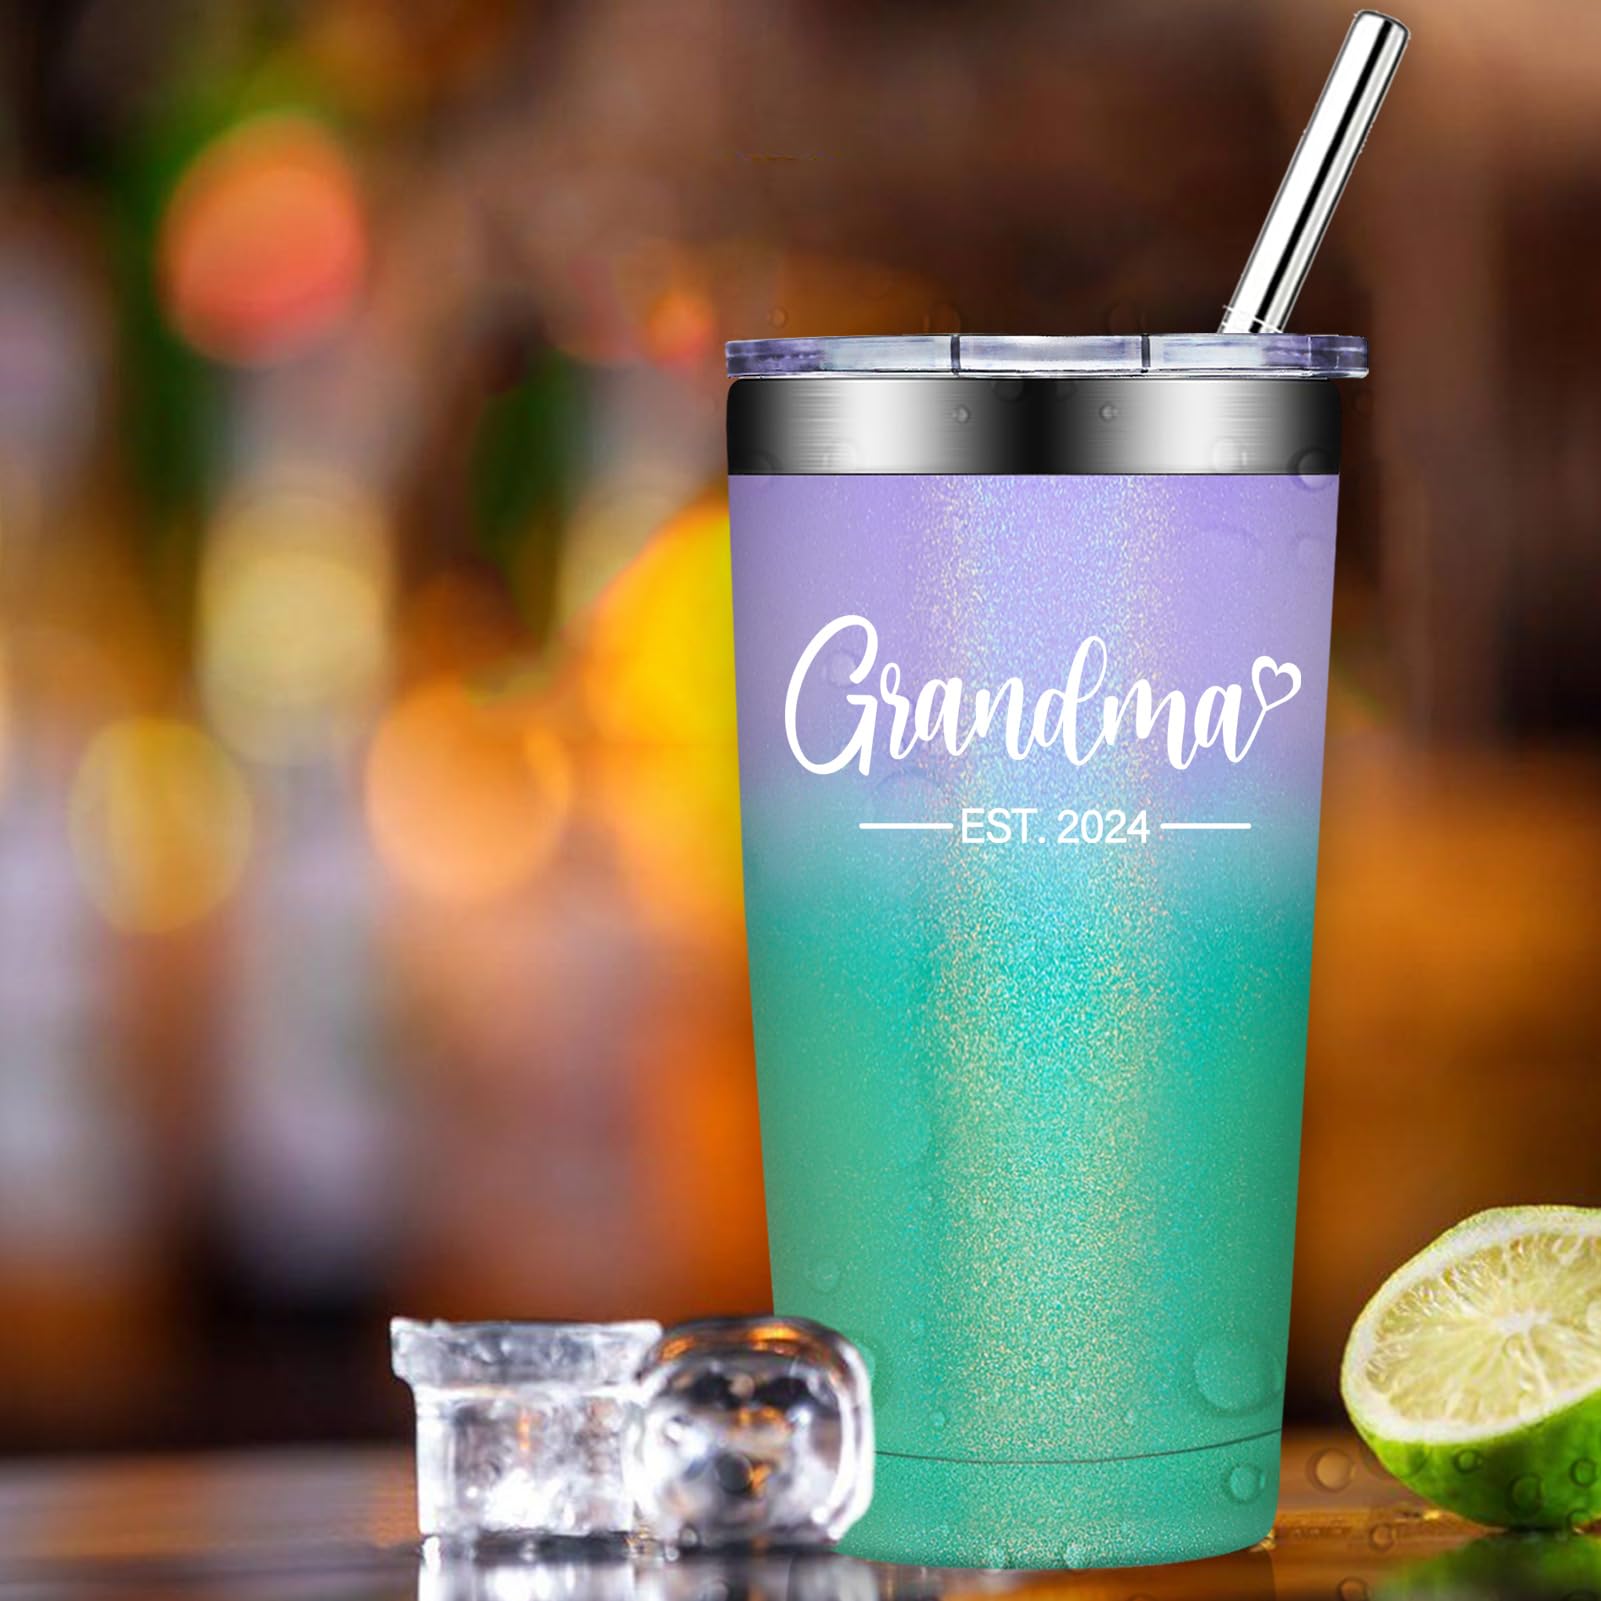 Grifarny New Grandma Gifts - Grandma Est. 2024 Tumbler Cup - First Time Grandma Gifts - 1st Mothers Day Gift for New Grandma, New Grandmother, Grandma to be, Promoted to Grandma